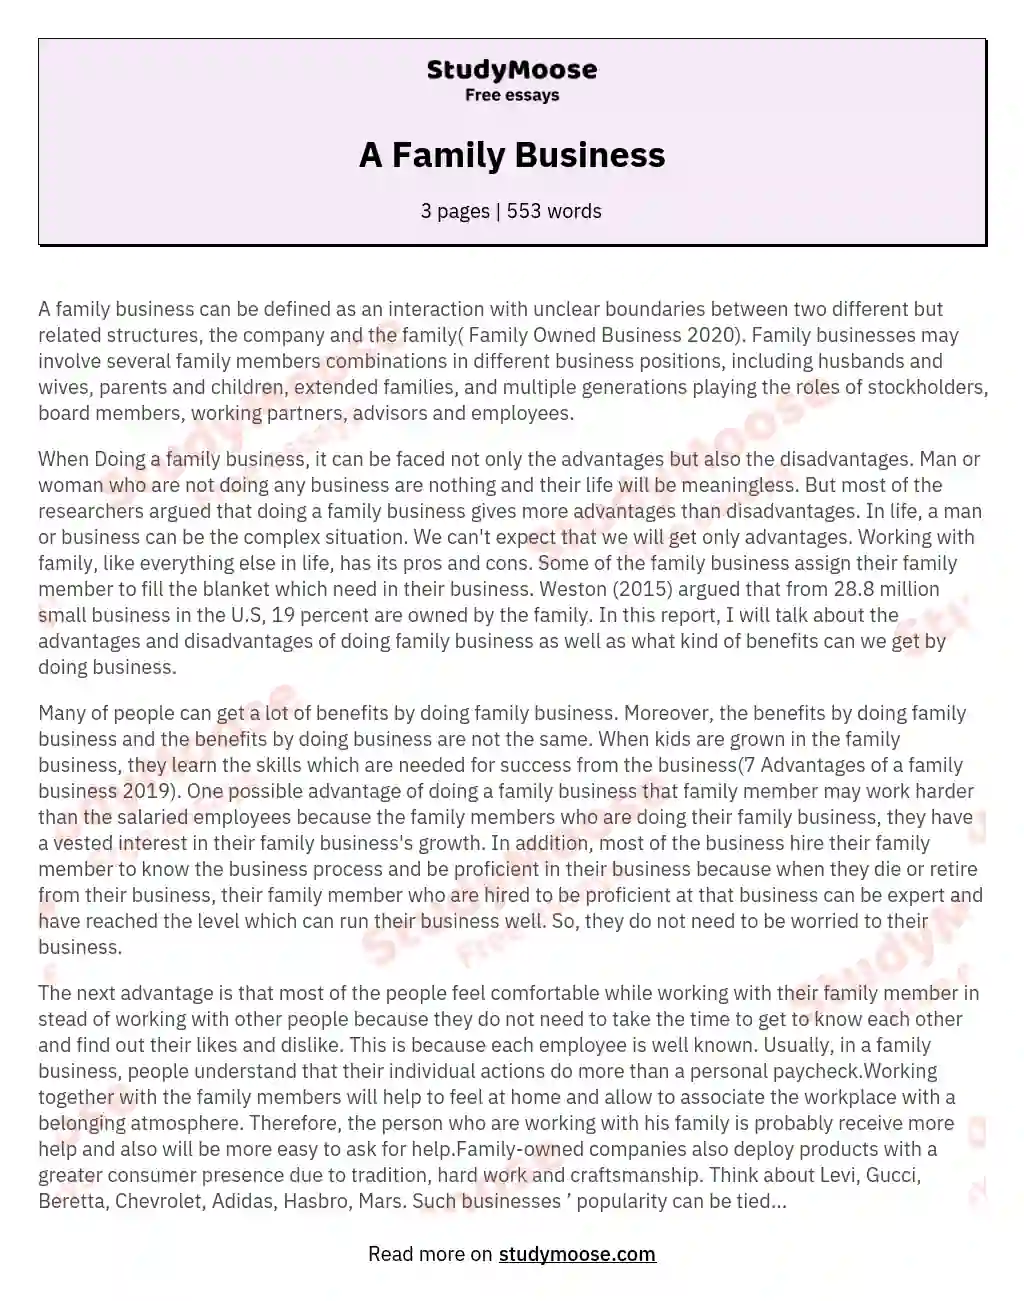 A Family Business essay